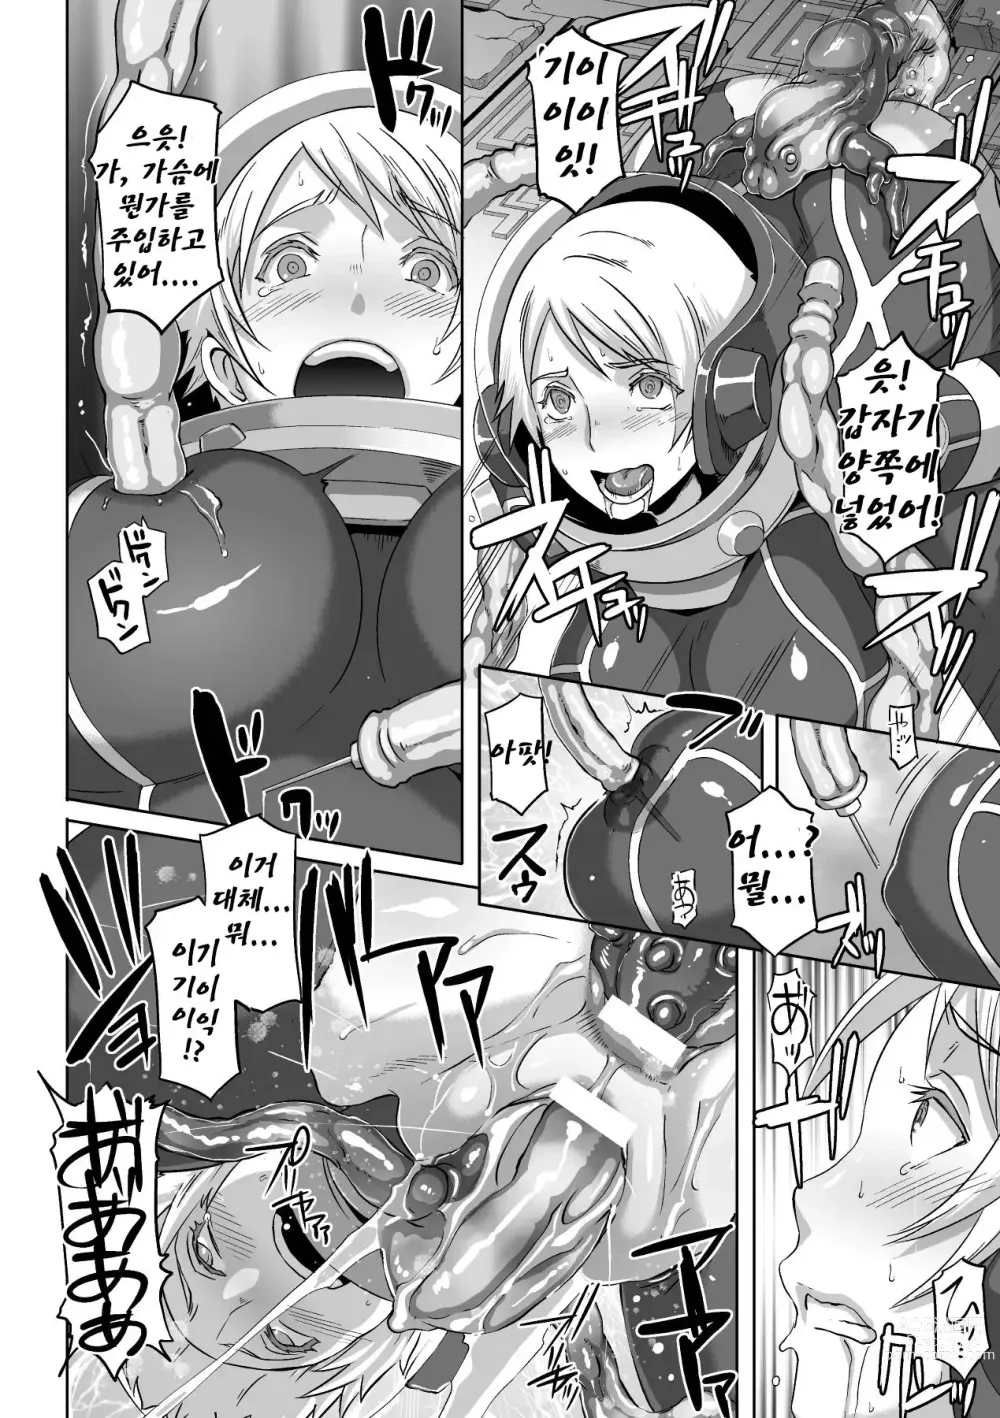 Page 7 of manga PARASITE-BEGINS